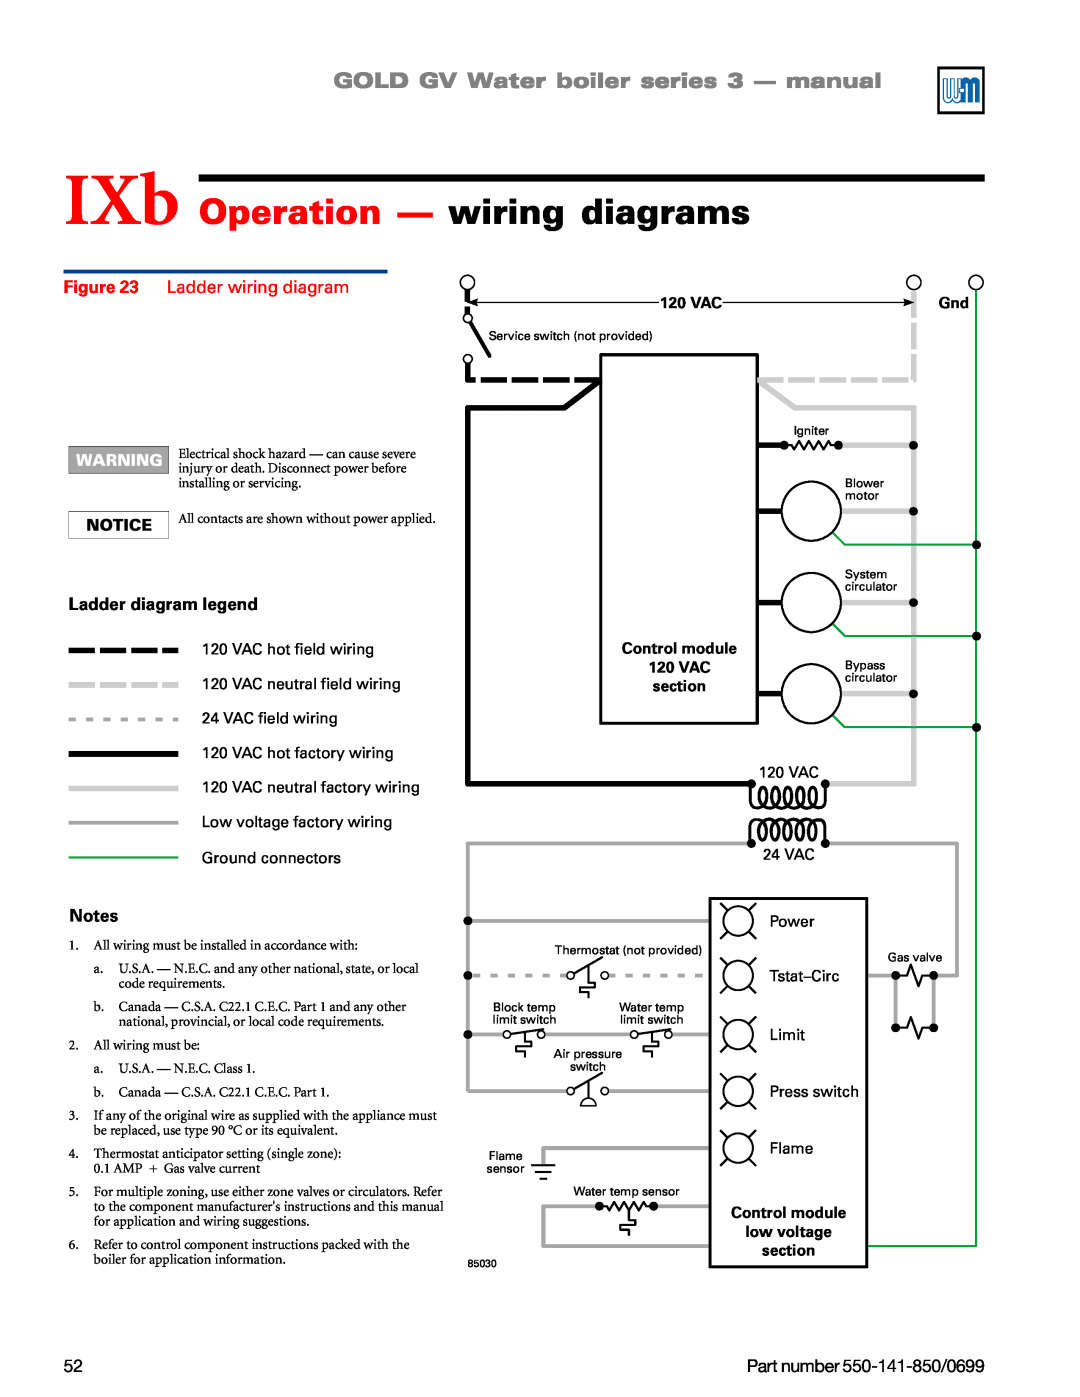 Weil-McLain GOLD DV WATER BOILER IXb Operation — wiring diagrams, GOLD GV Water boiler series 3 - manual, Notes 